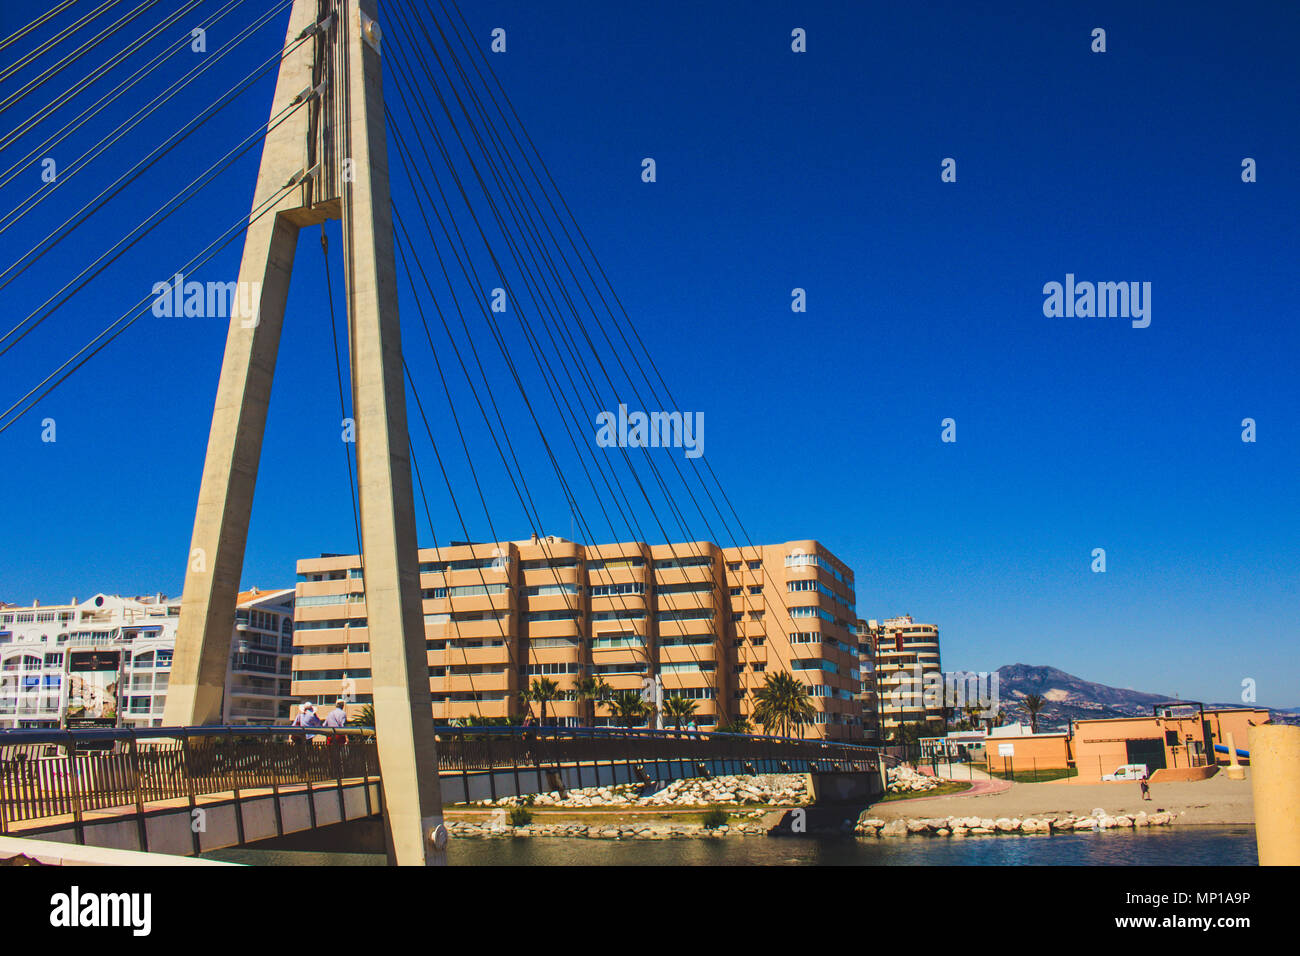 Bridge. Bridge over the river ¨Fuengirola¨ in Fuengirola. Malaga province, Andalusia, Spain. Picture taken – 15 may 2018. Stock Photo